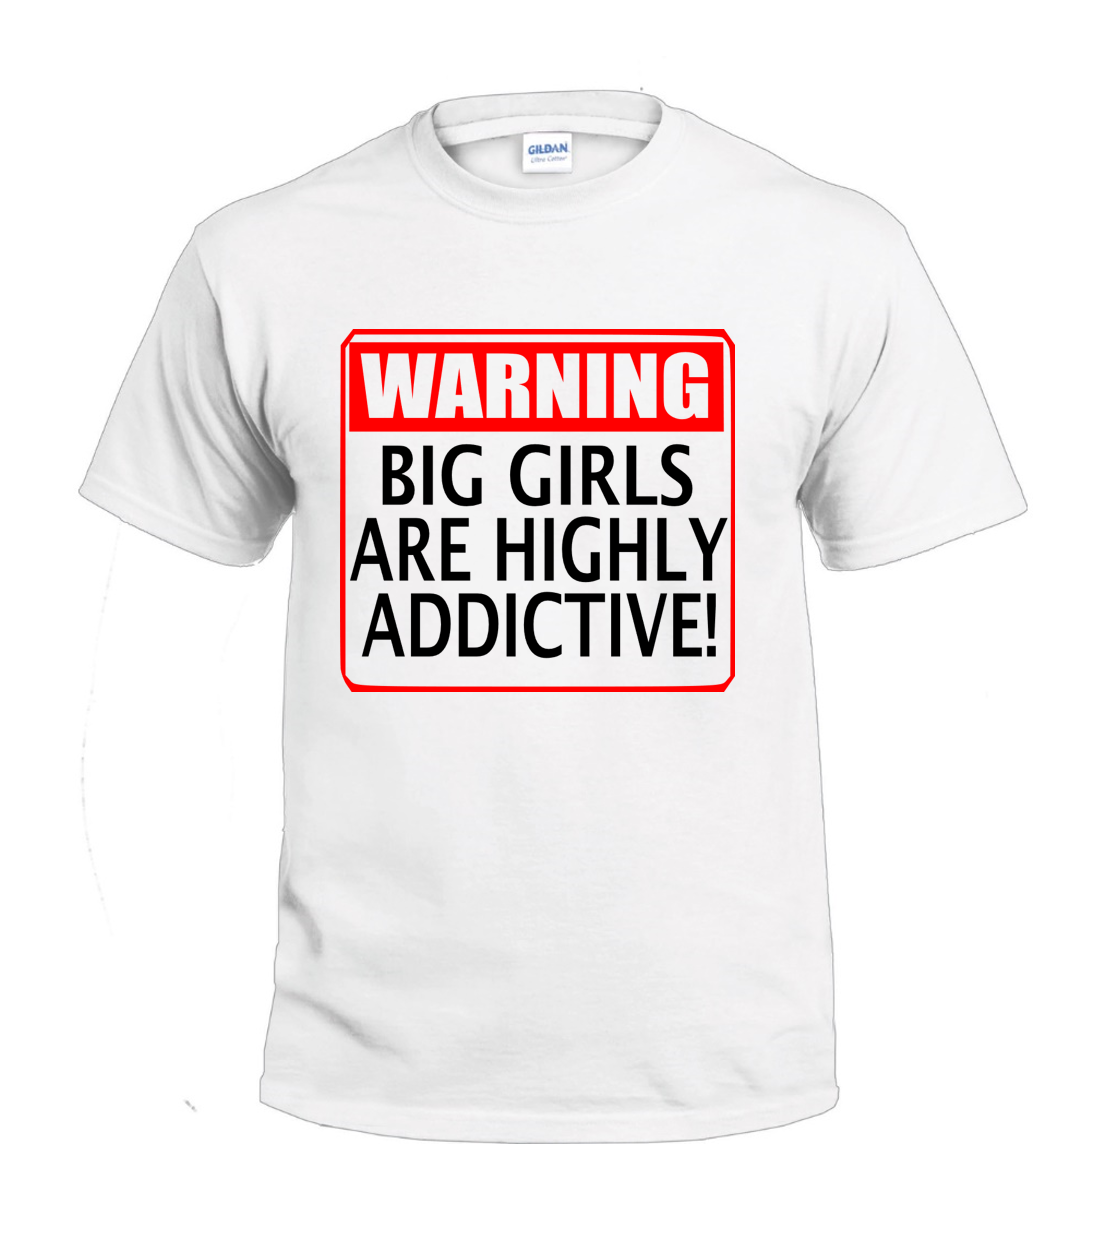 Highly Addictive t-shirt